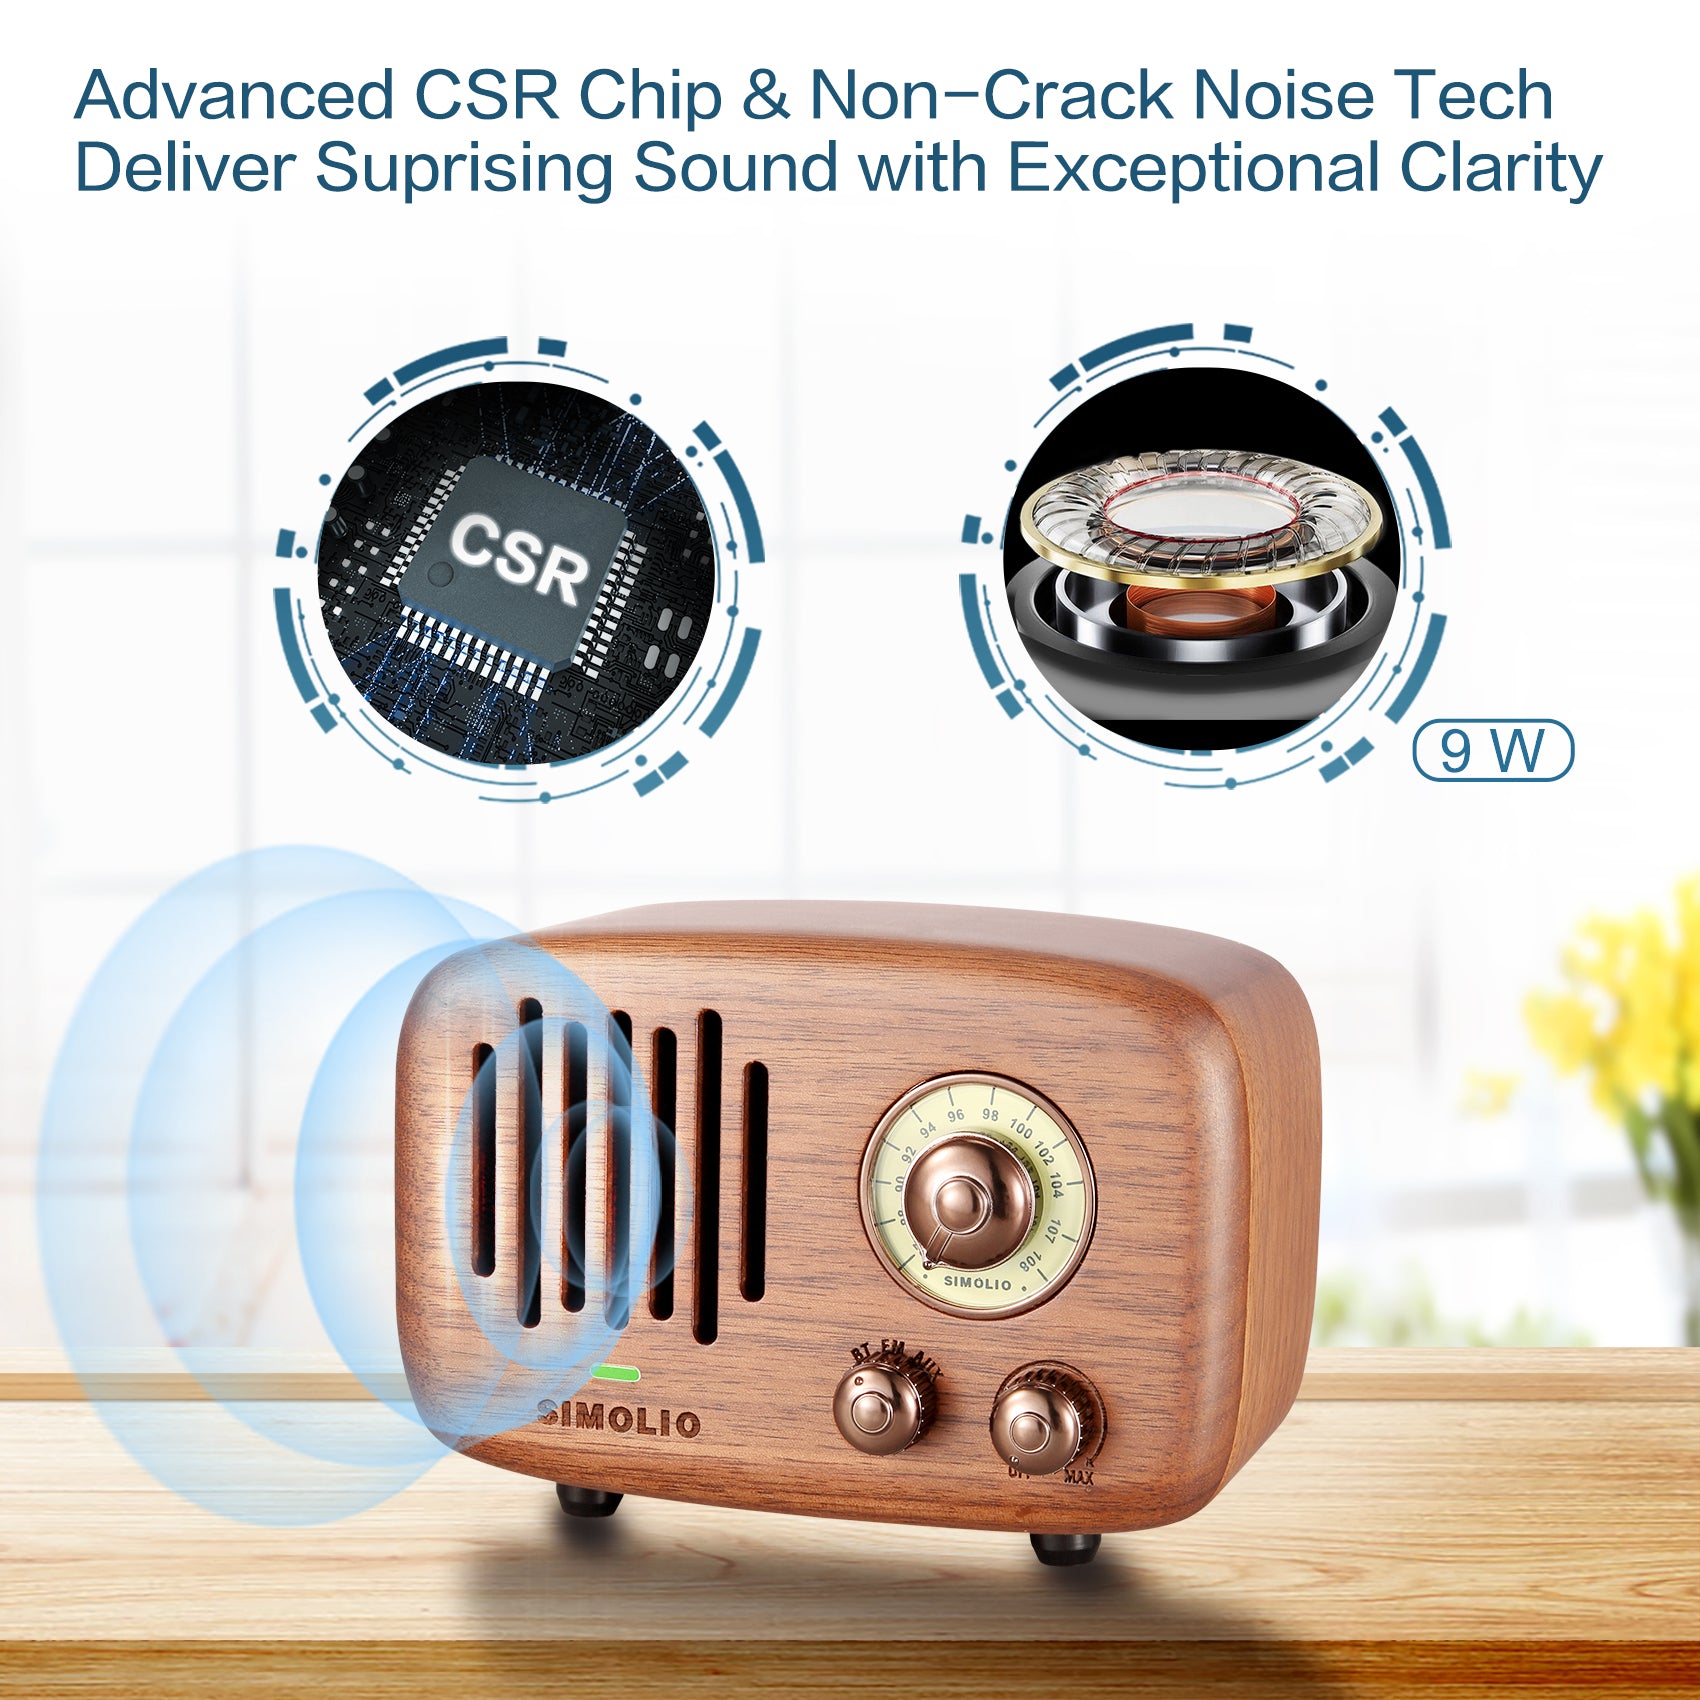 Simolio SM-761M retro nlutooth speakers CRS chip non crack noise tech